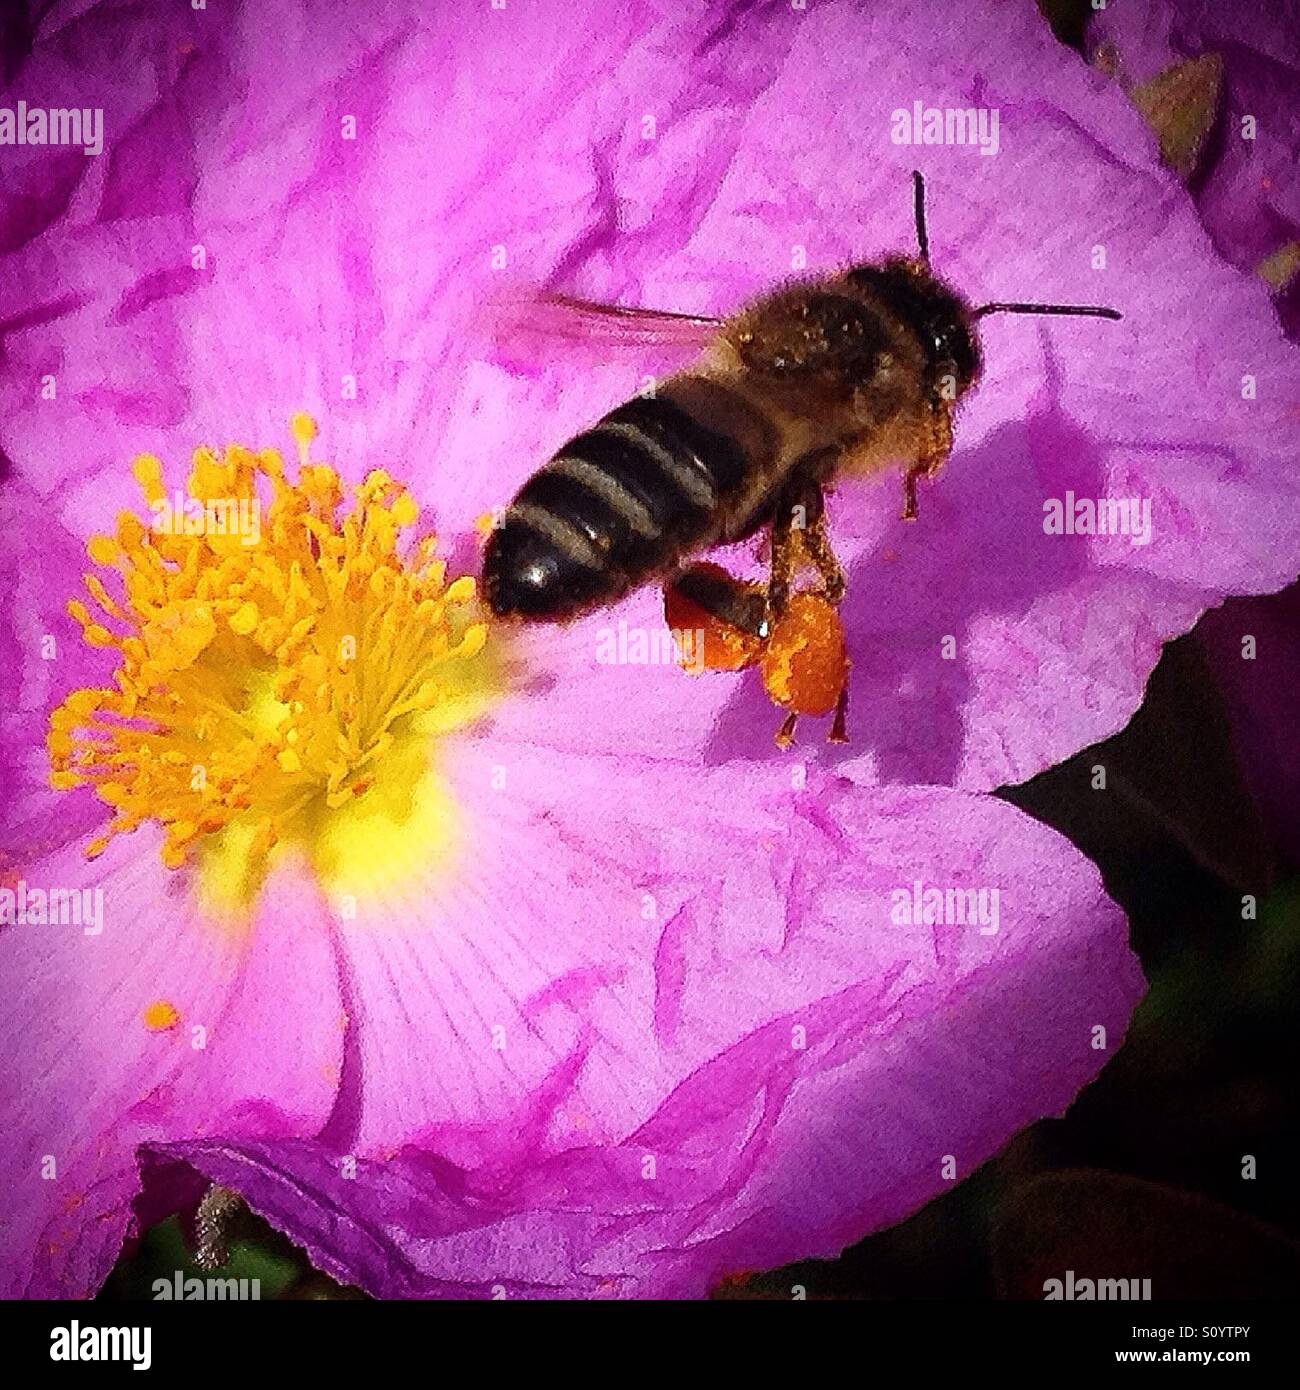 A honey bee carries pollen flying over a purple flower in Prado del Rey, Sierra de Cadiz, Andalusia, Spain Stock Photo